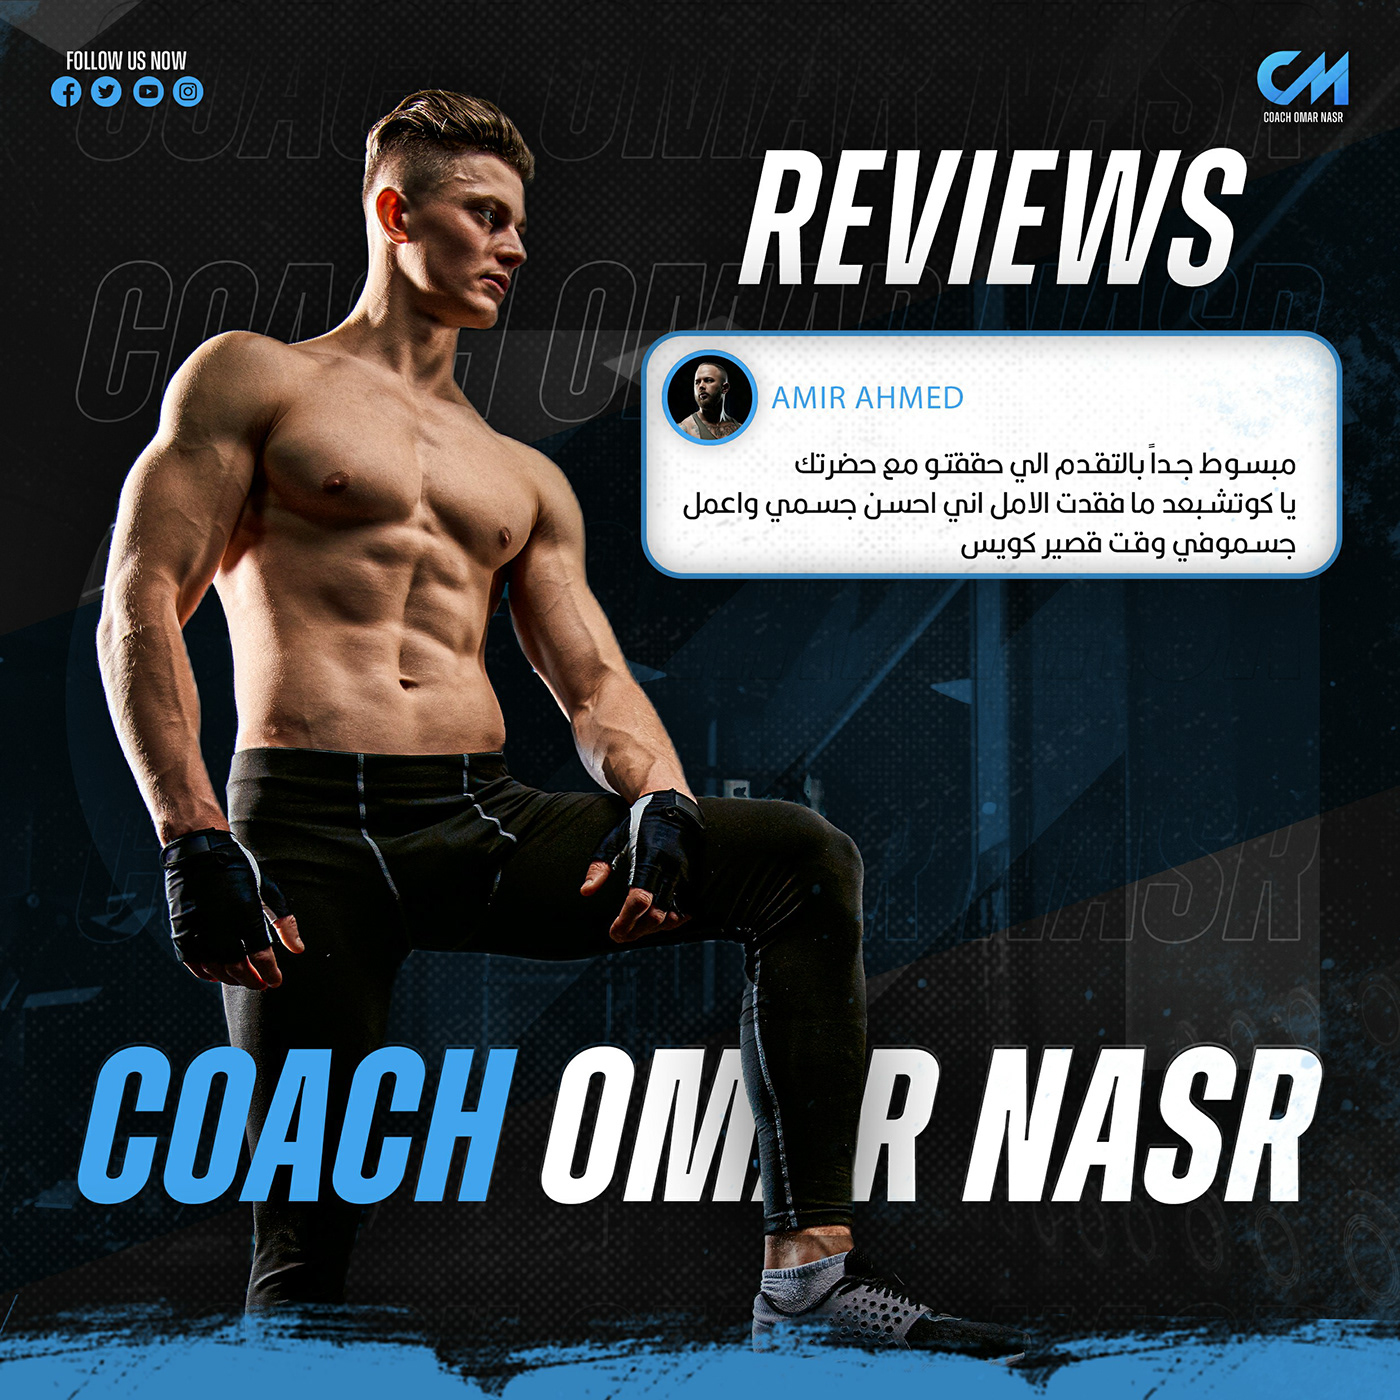 fitness coaching training adobe illustrator Adobe Photoshop Graphic Designer Social media post Advertising  gym online coaching